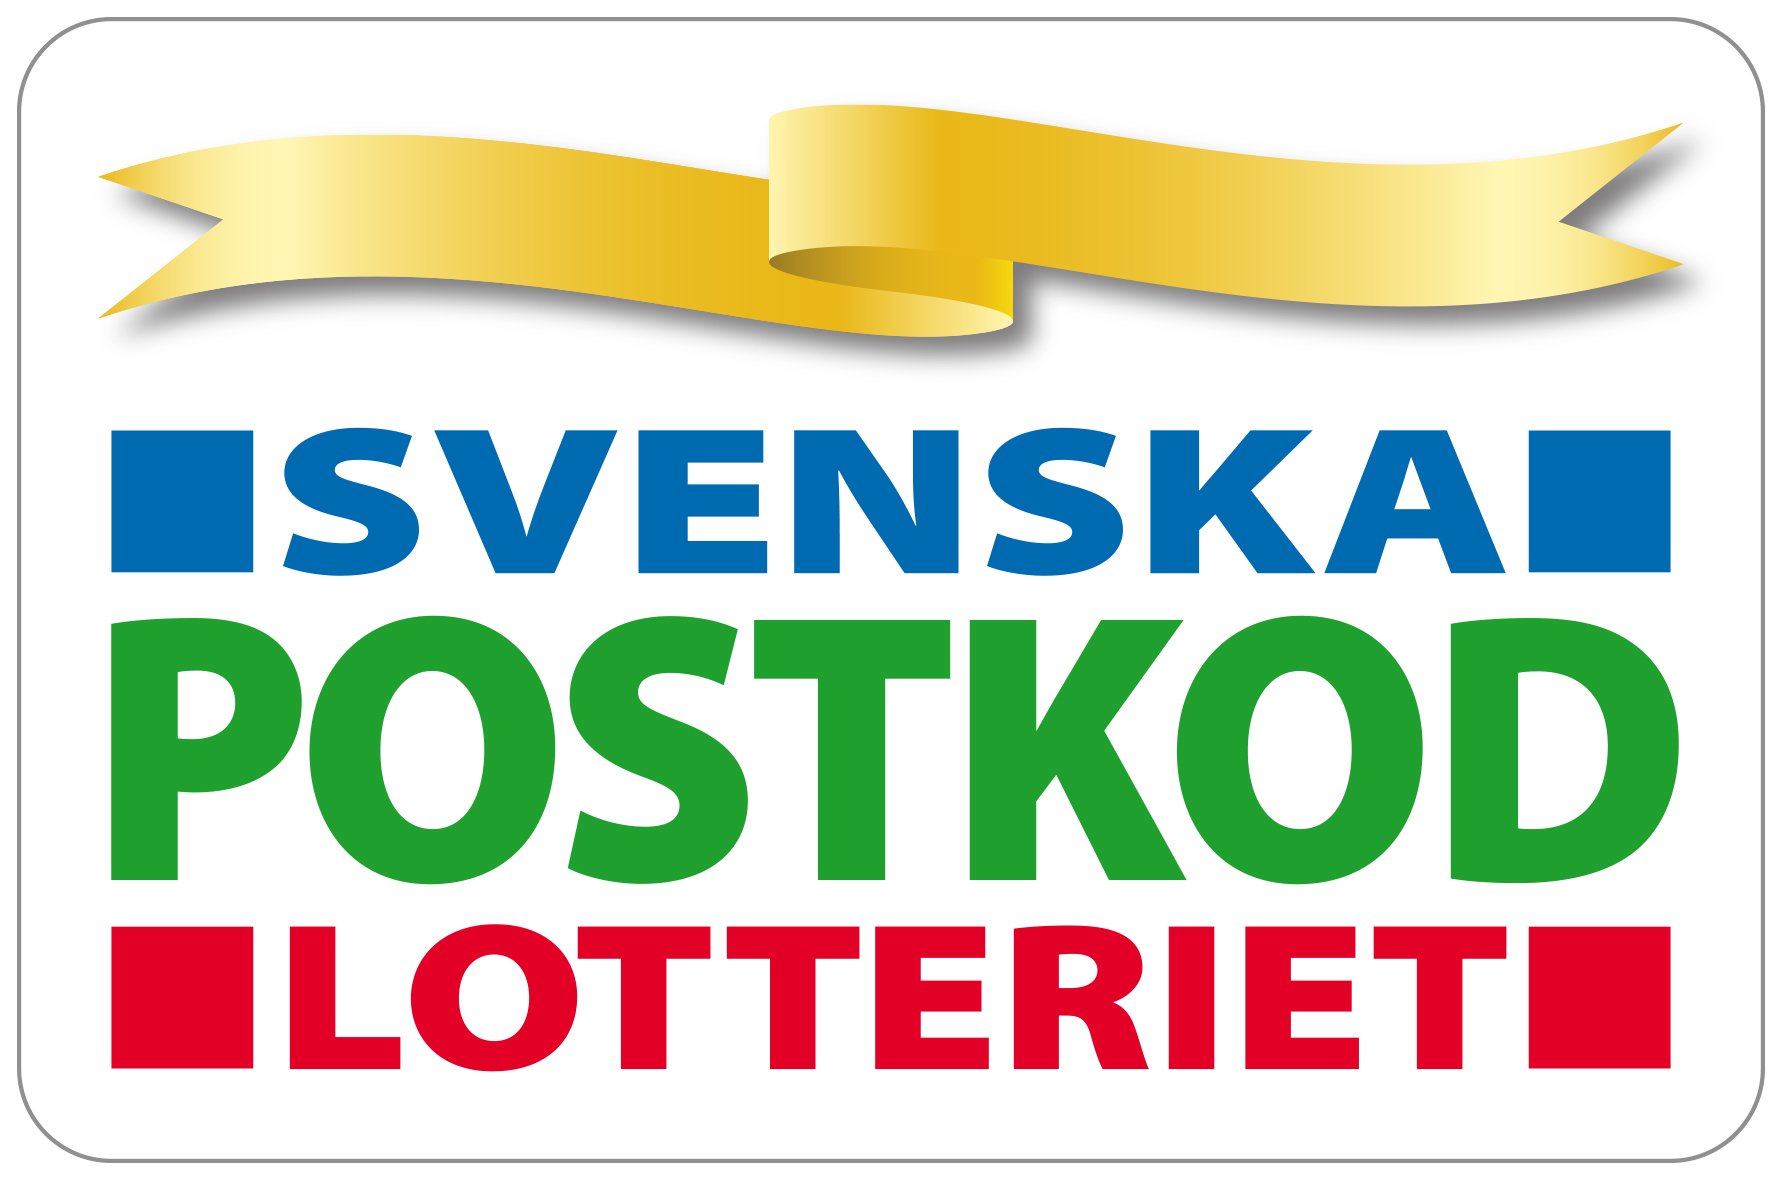 Svenska postkodlotteriet logo